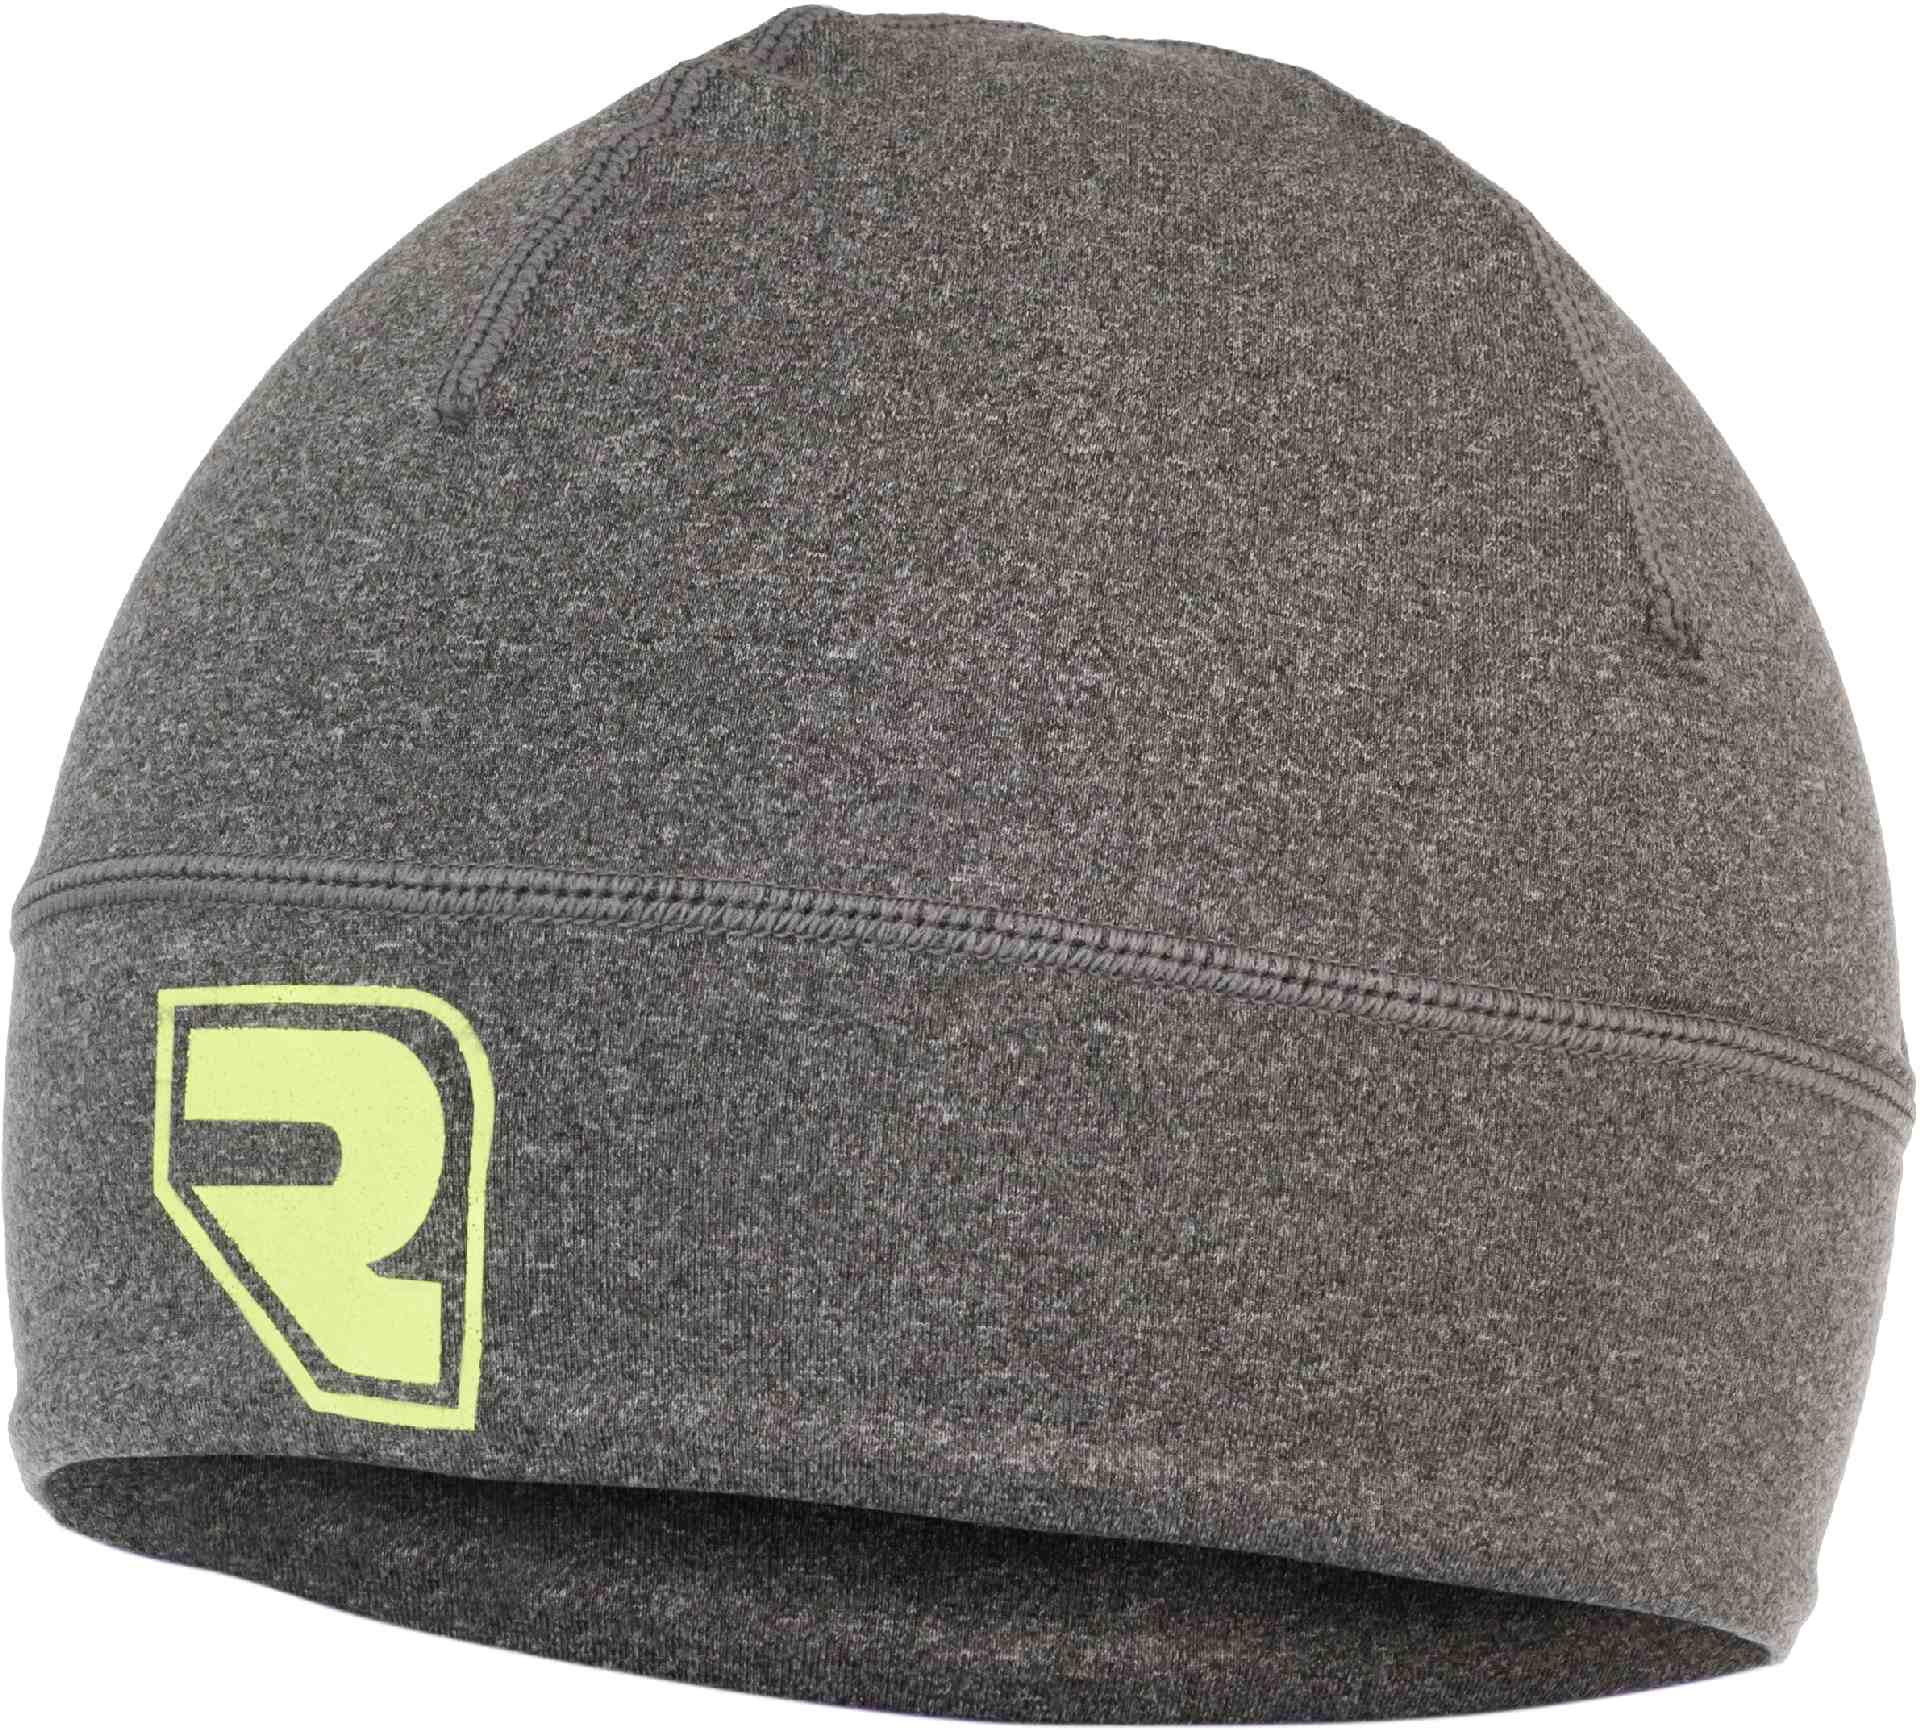 Unisex winter sports hat